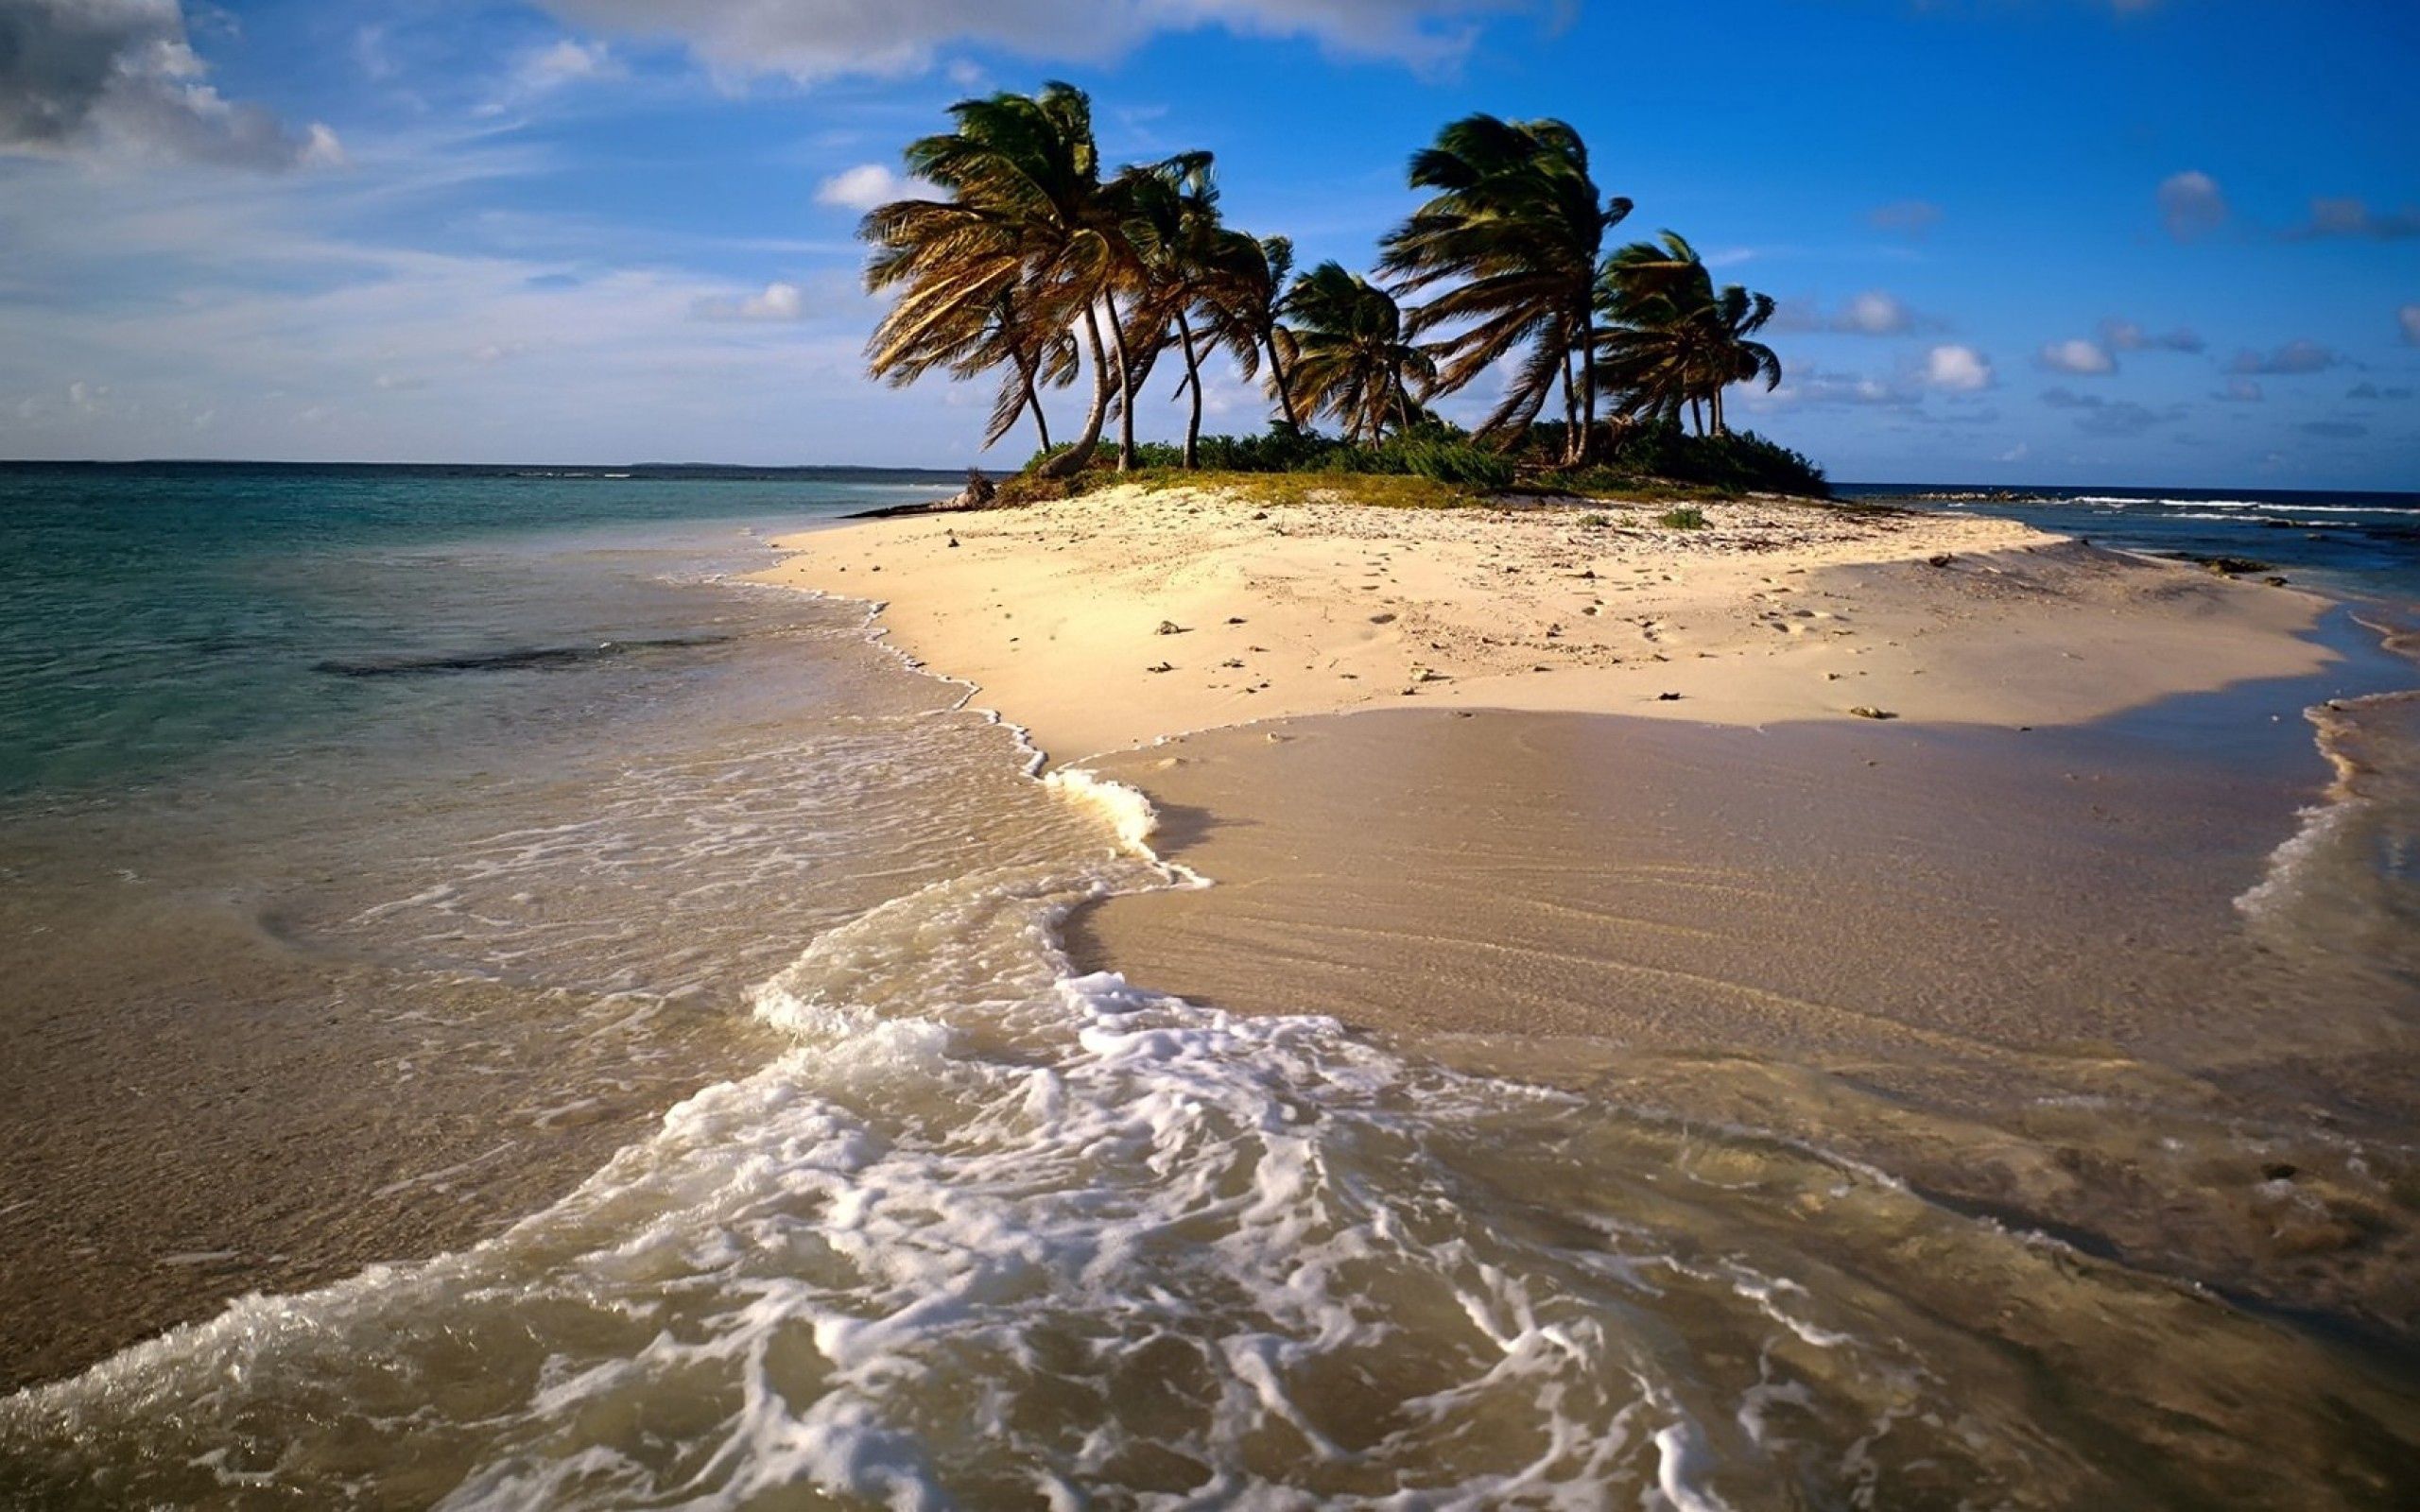 154792 descargar imagen naturaleza, mar, playa, arena, palma: fondos de pantalla y protectores de pantalla gratis